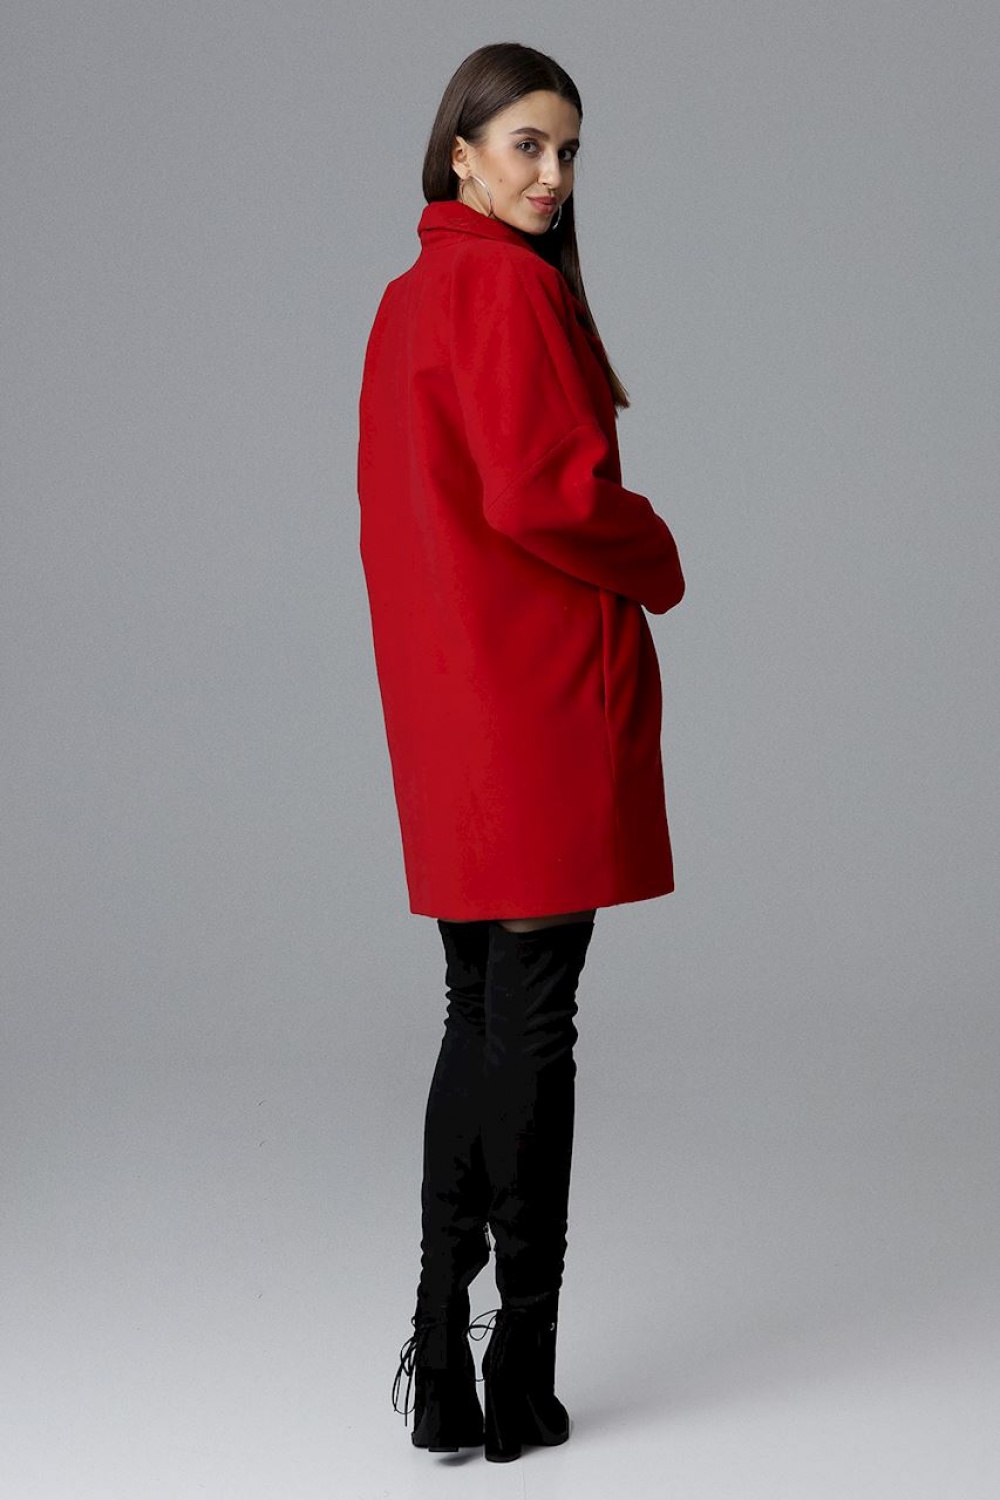  Coat model 124230 Figl  red